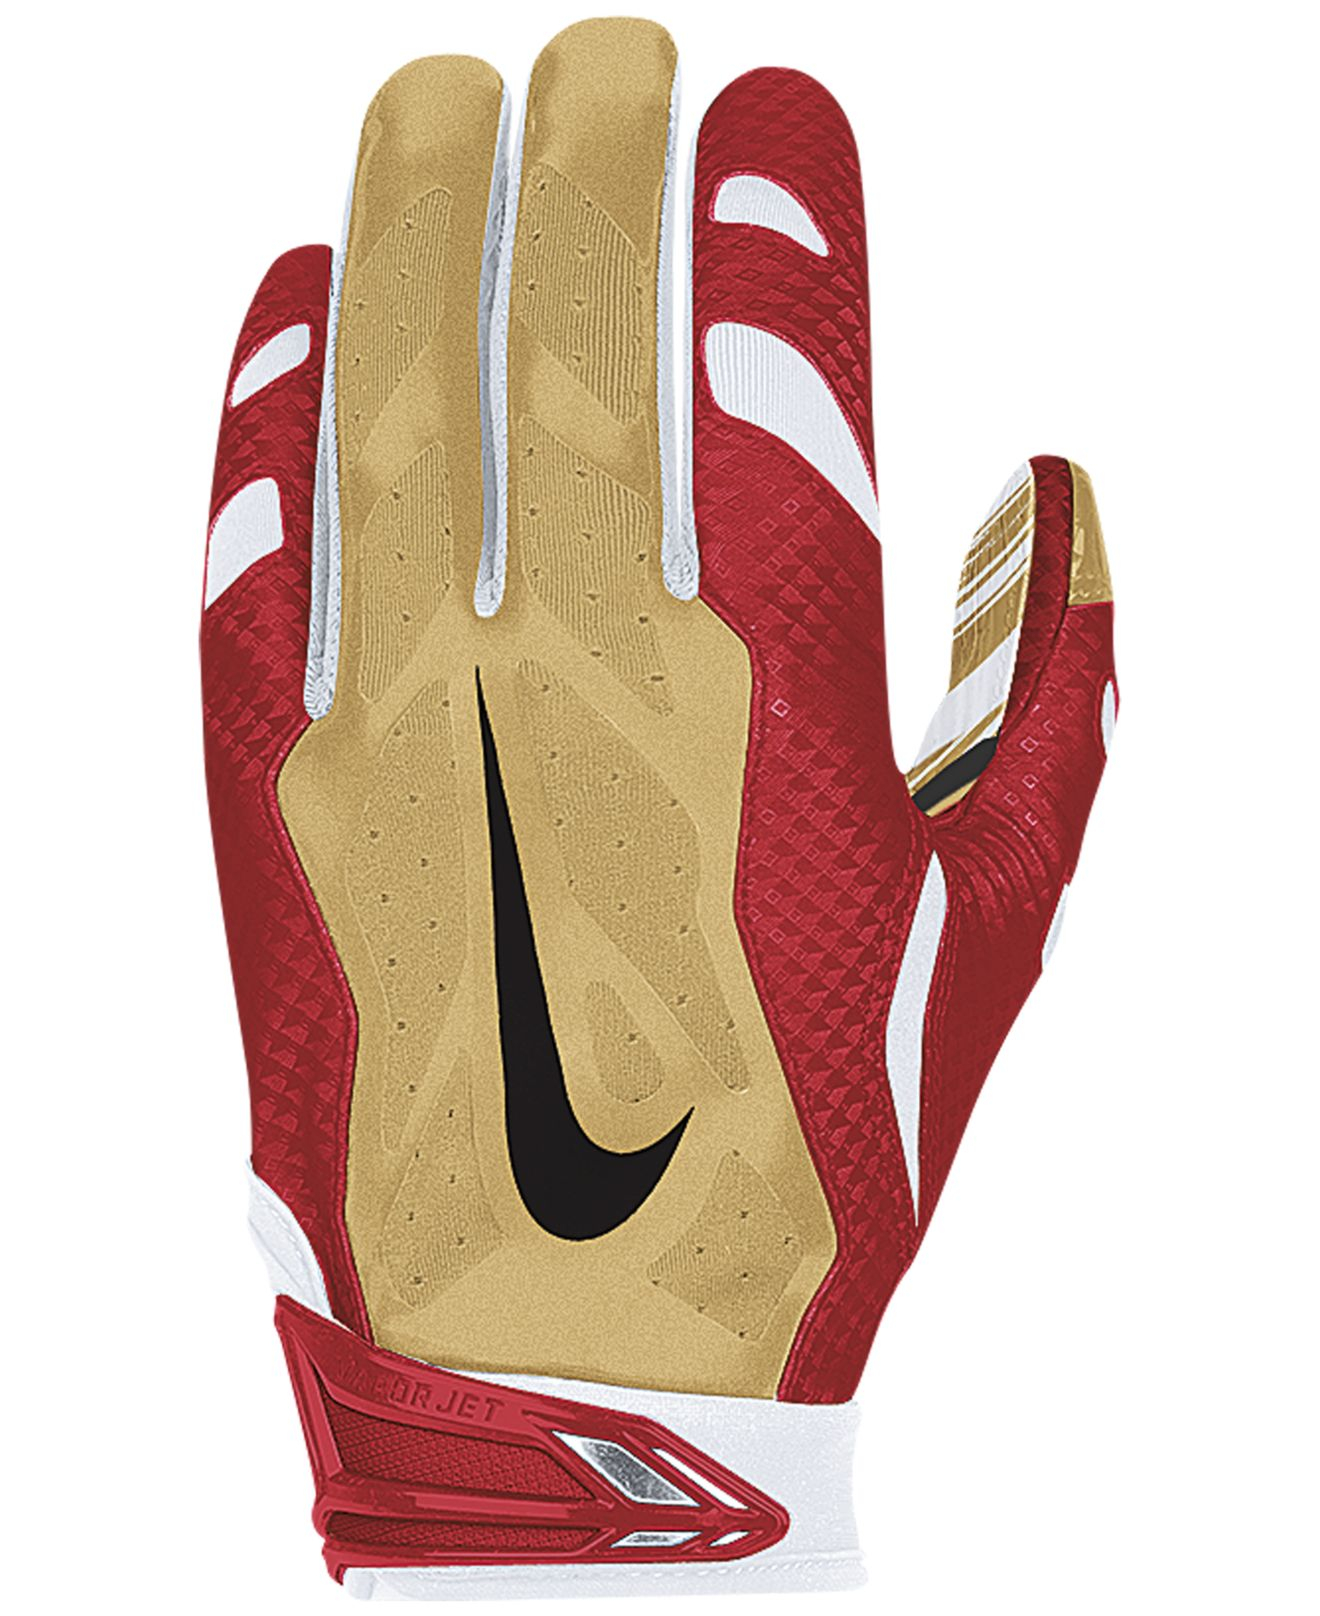 49ers vapor gloves